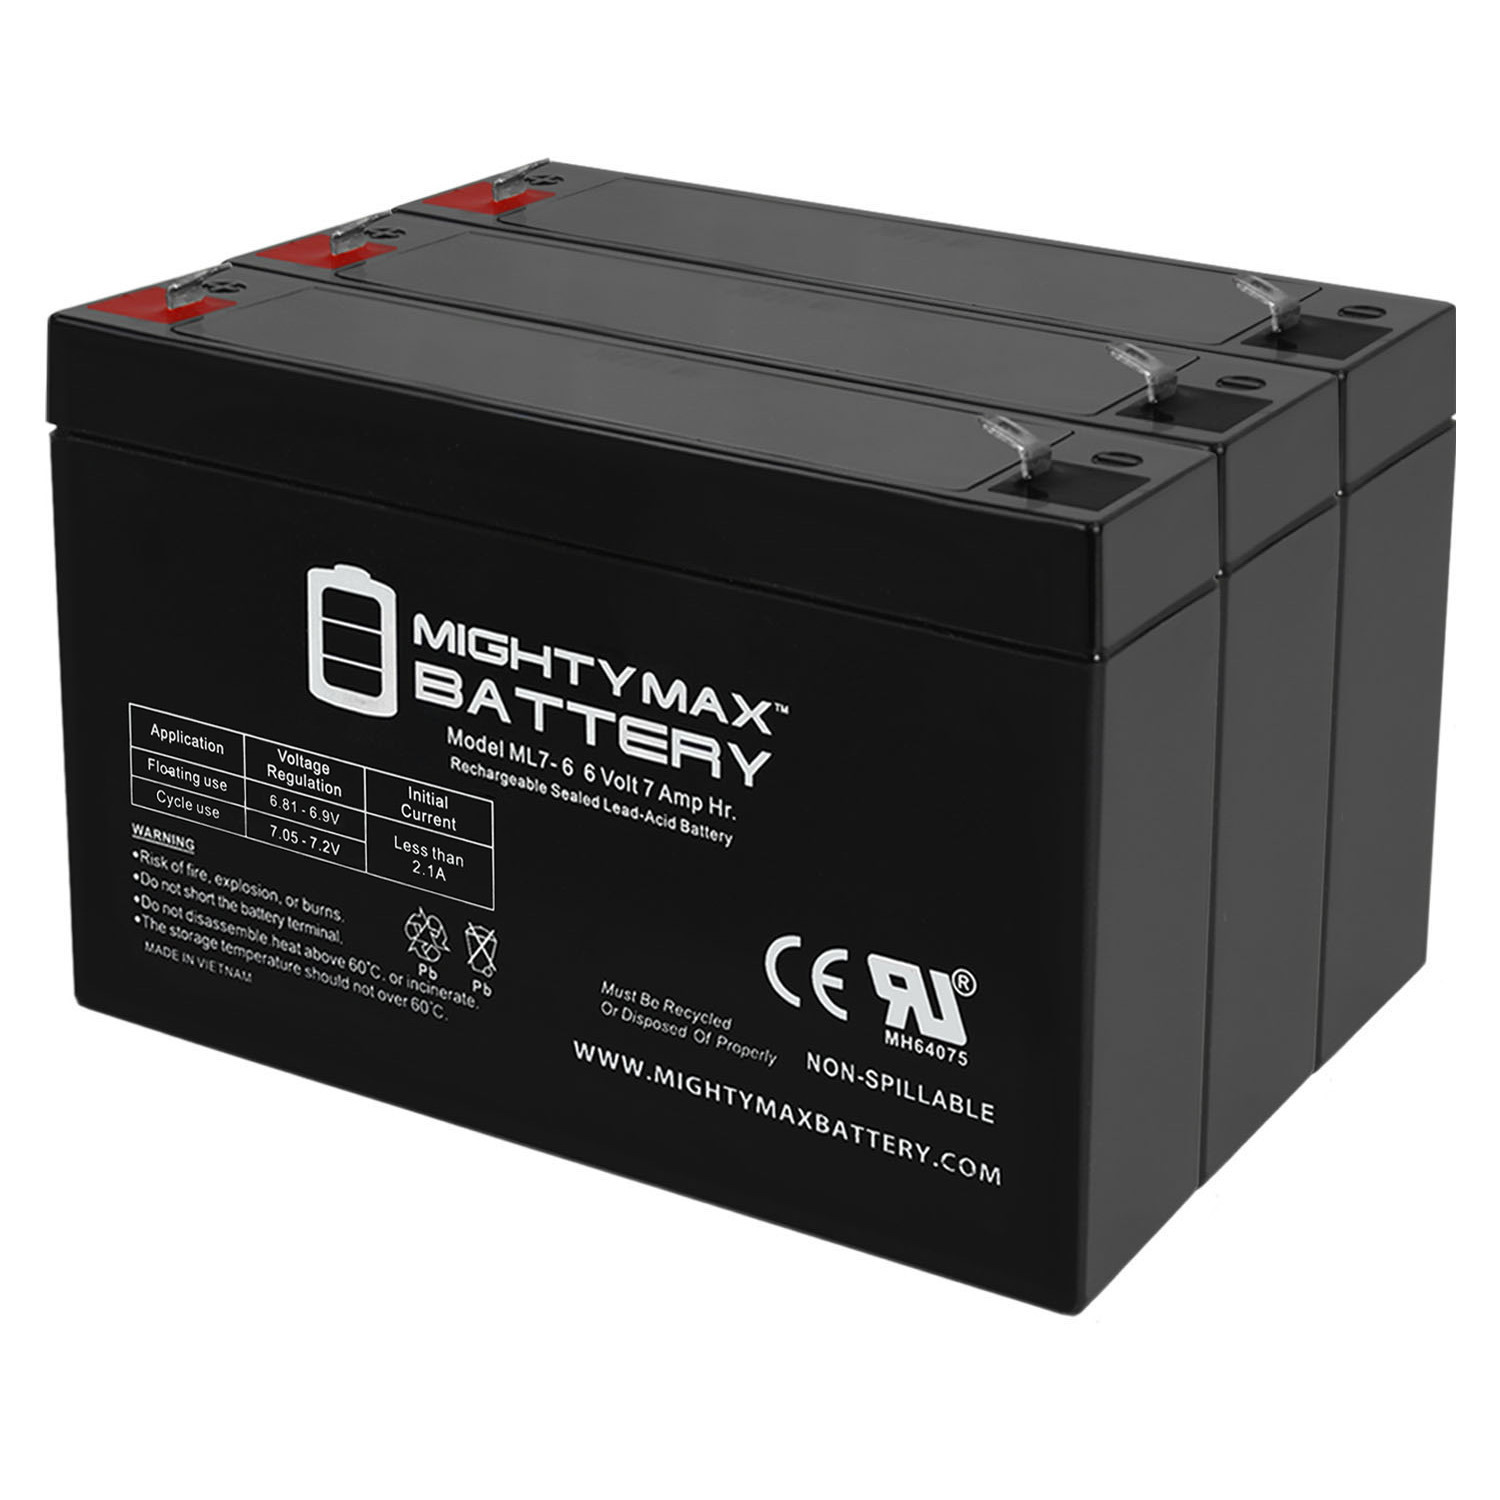 6V 7Ah SLA Replacement Battery for Elan 1621 - 3 Pack